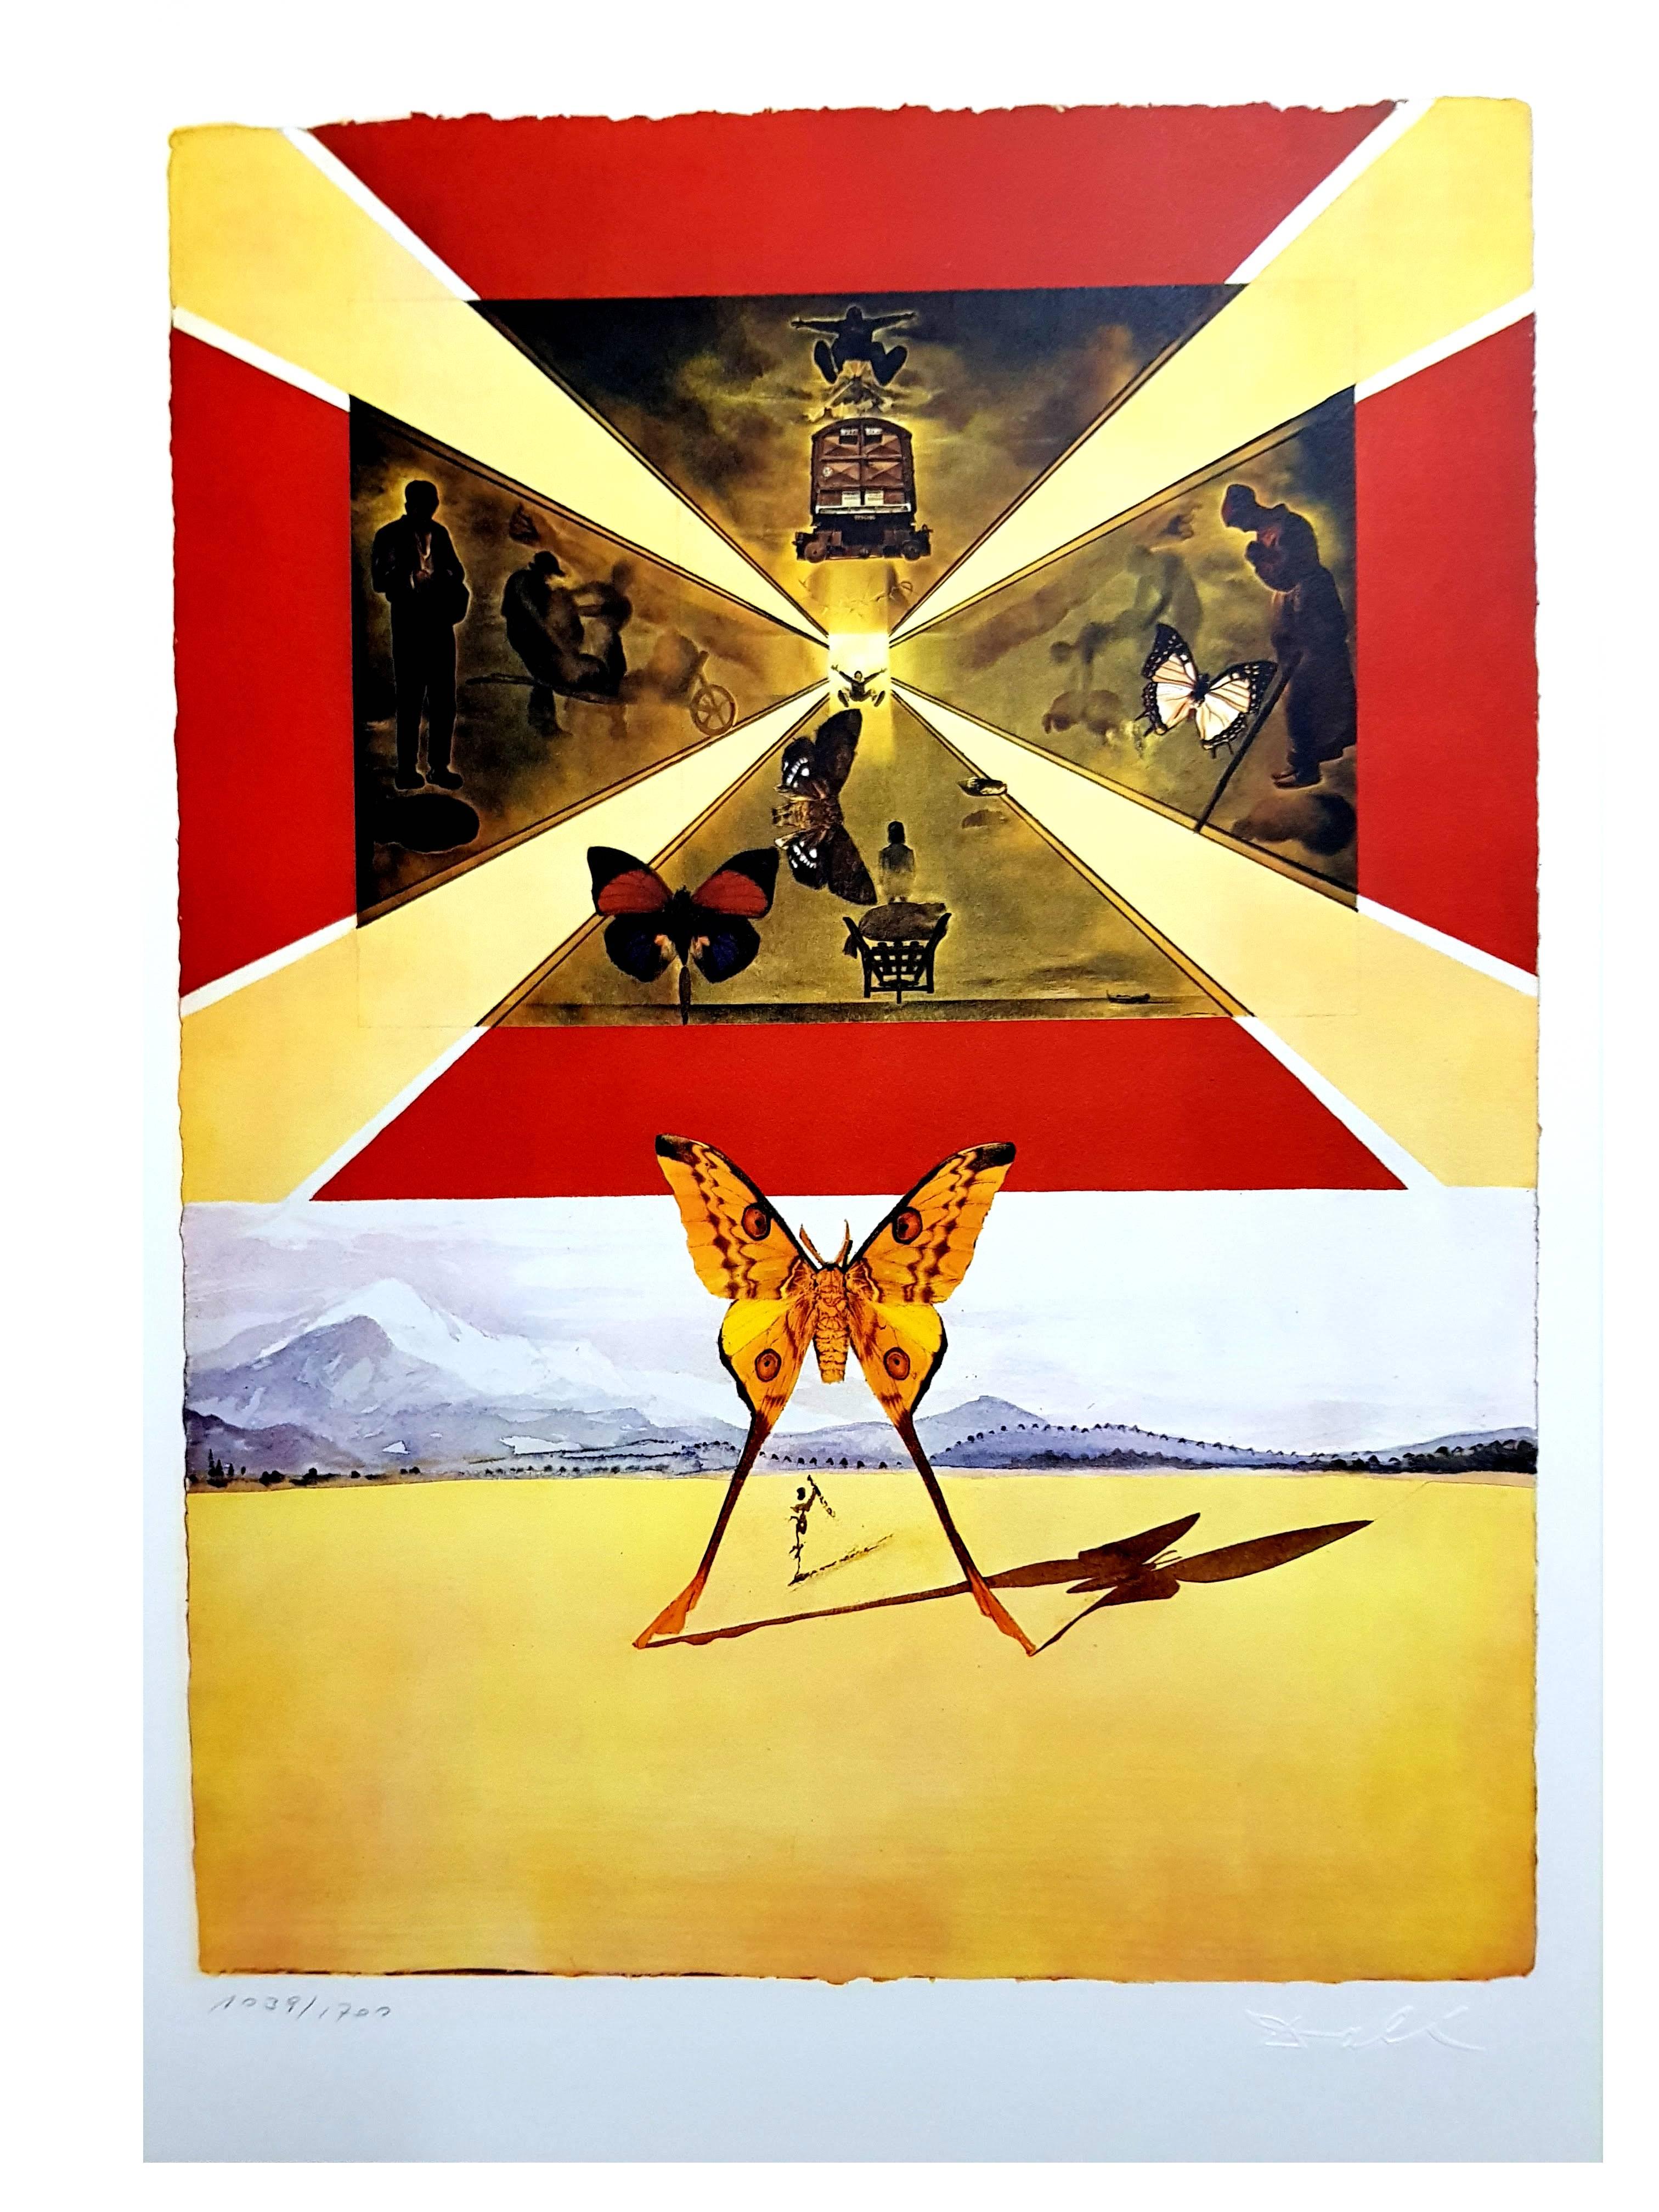 Salvador Dalí Animal Print - Salvador Dali - Roussillon - Original Lithograph